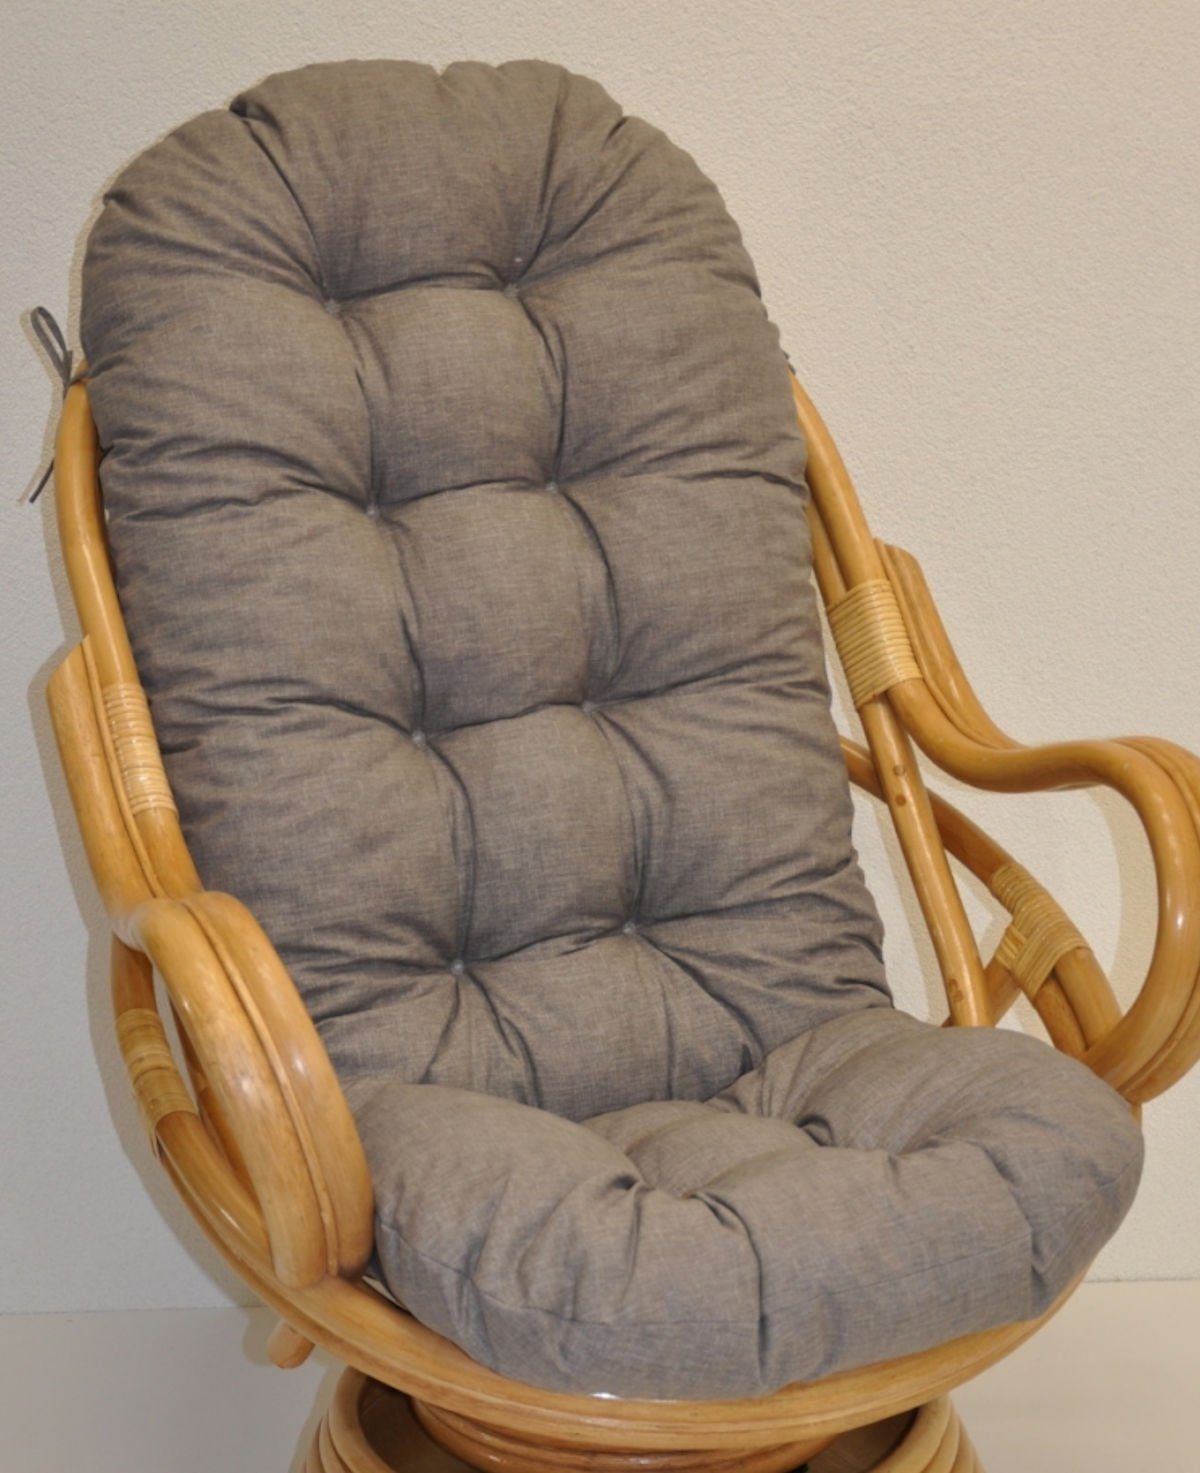 Rattani Sesselauflage Polster für Rattan Schaukelstuhl Drehsessel L 135 cm Color dunkel grau